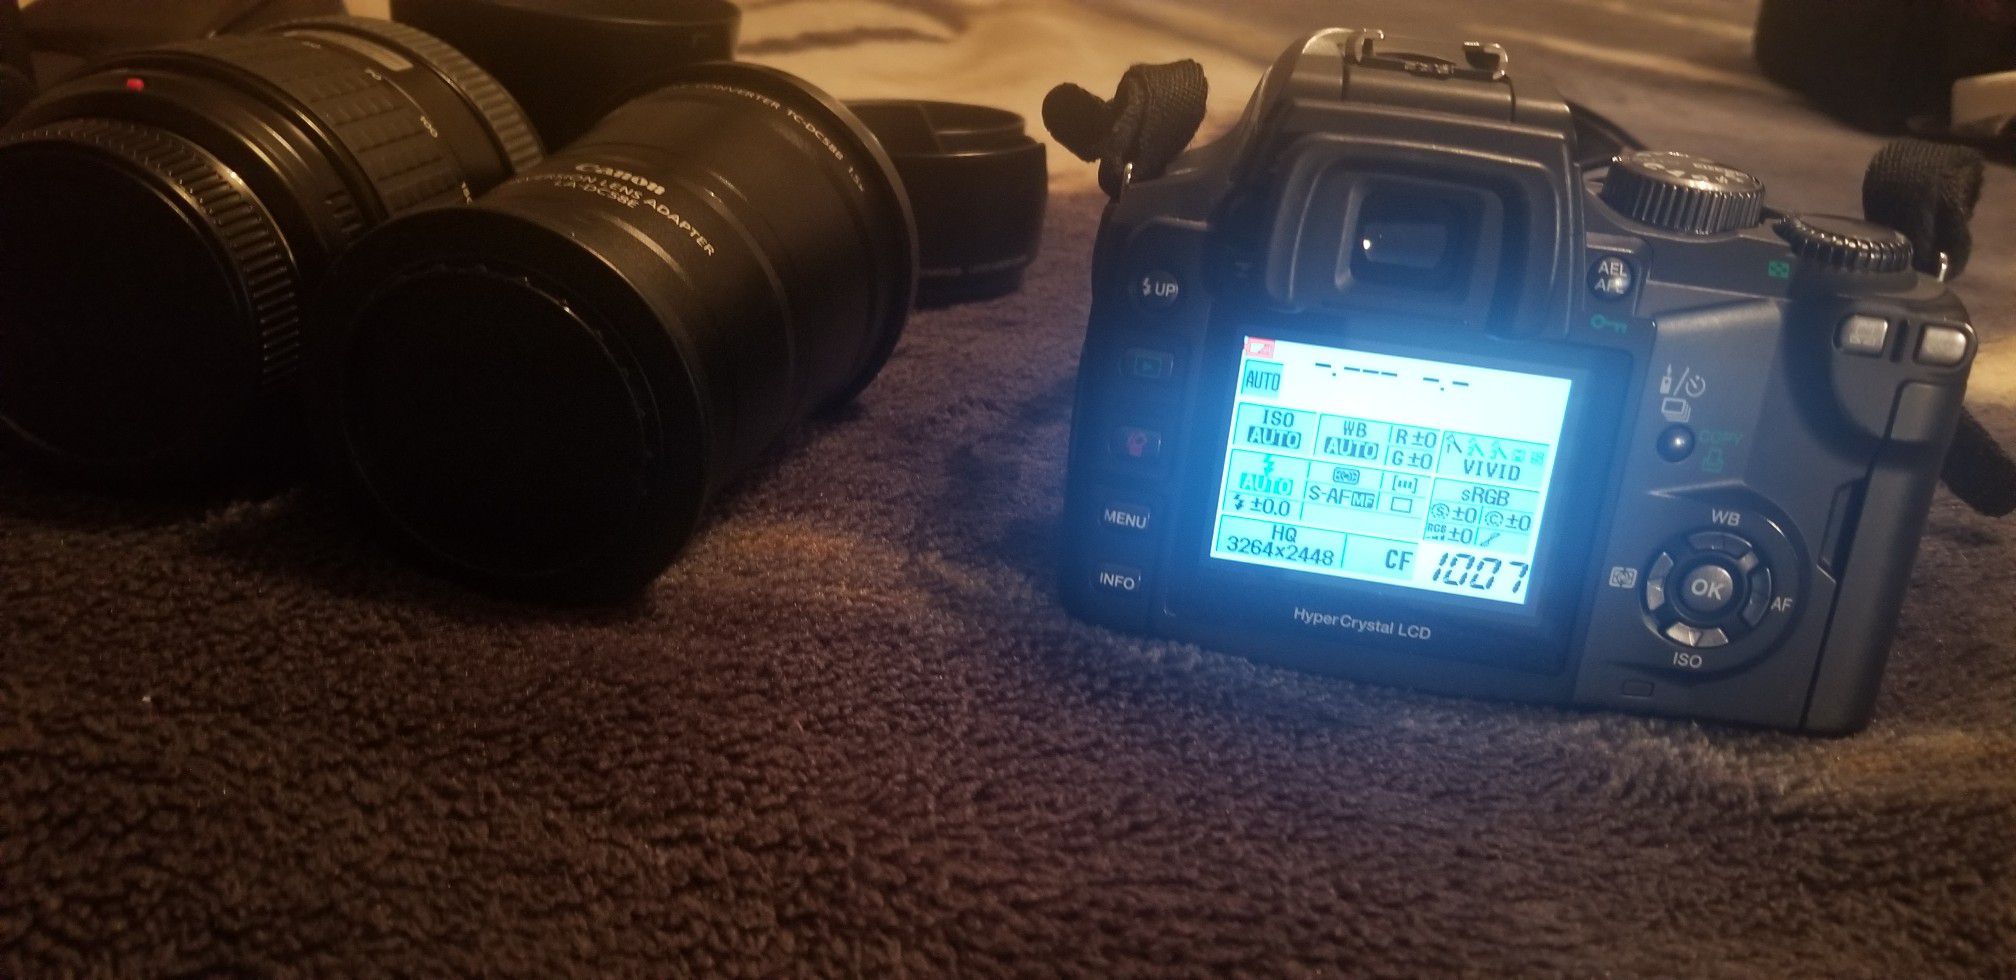 The Olympus E-500 Digital Camera